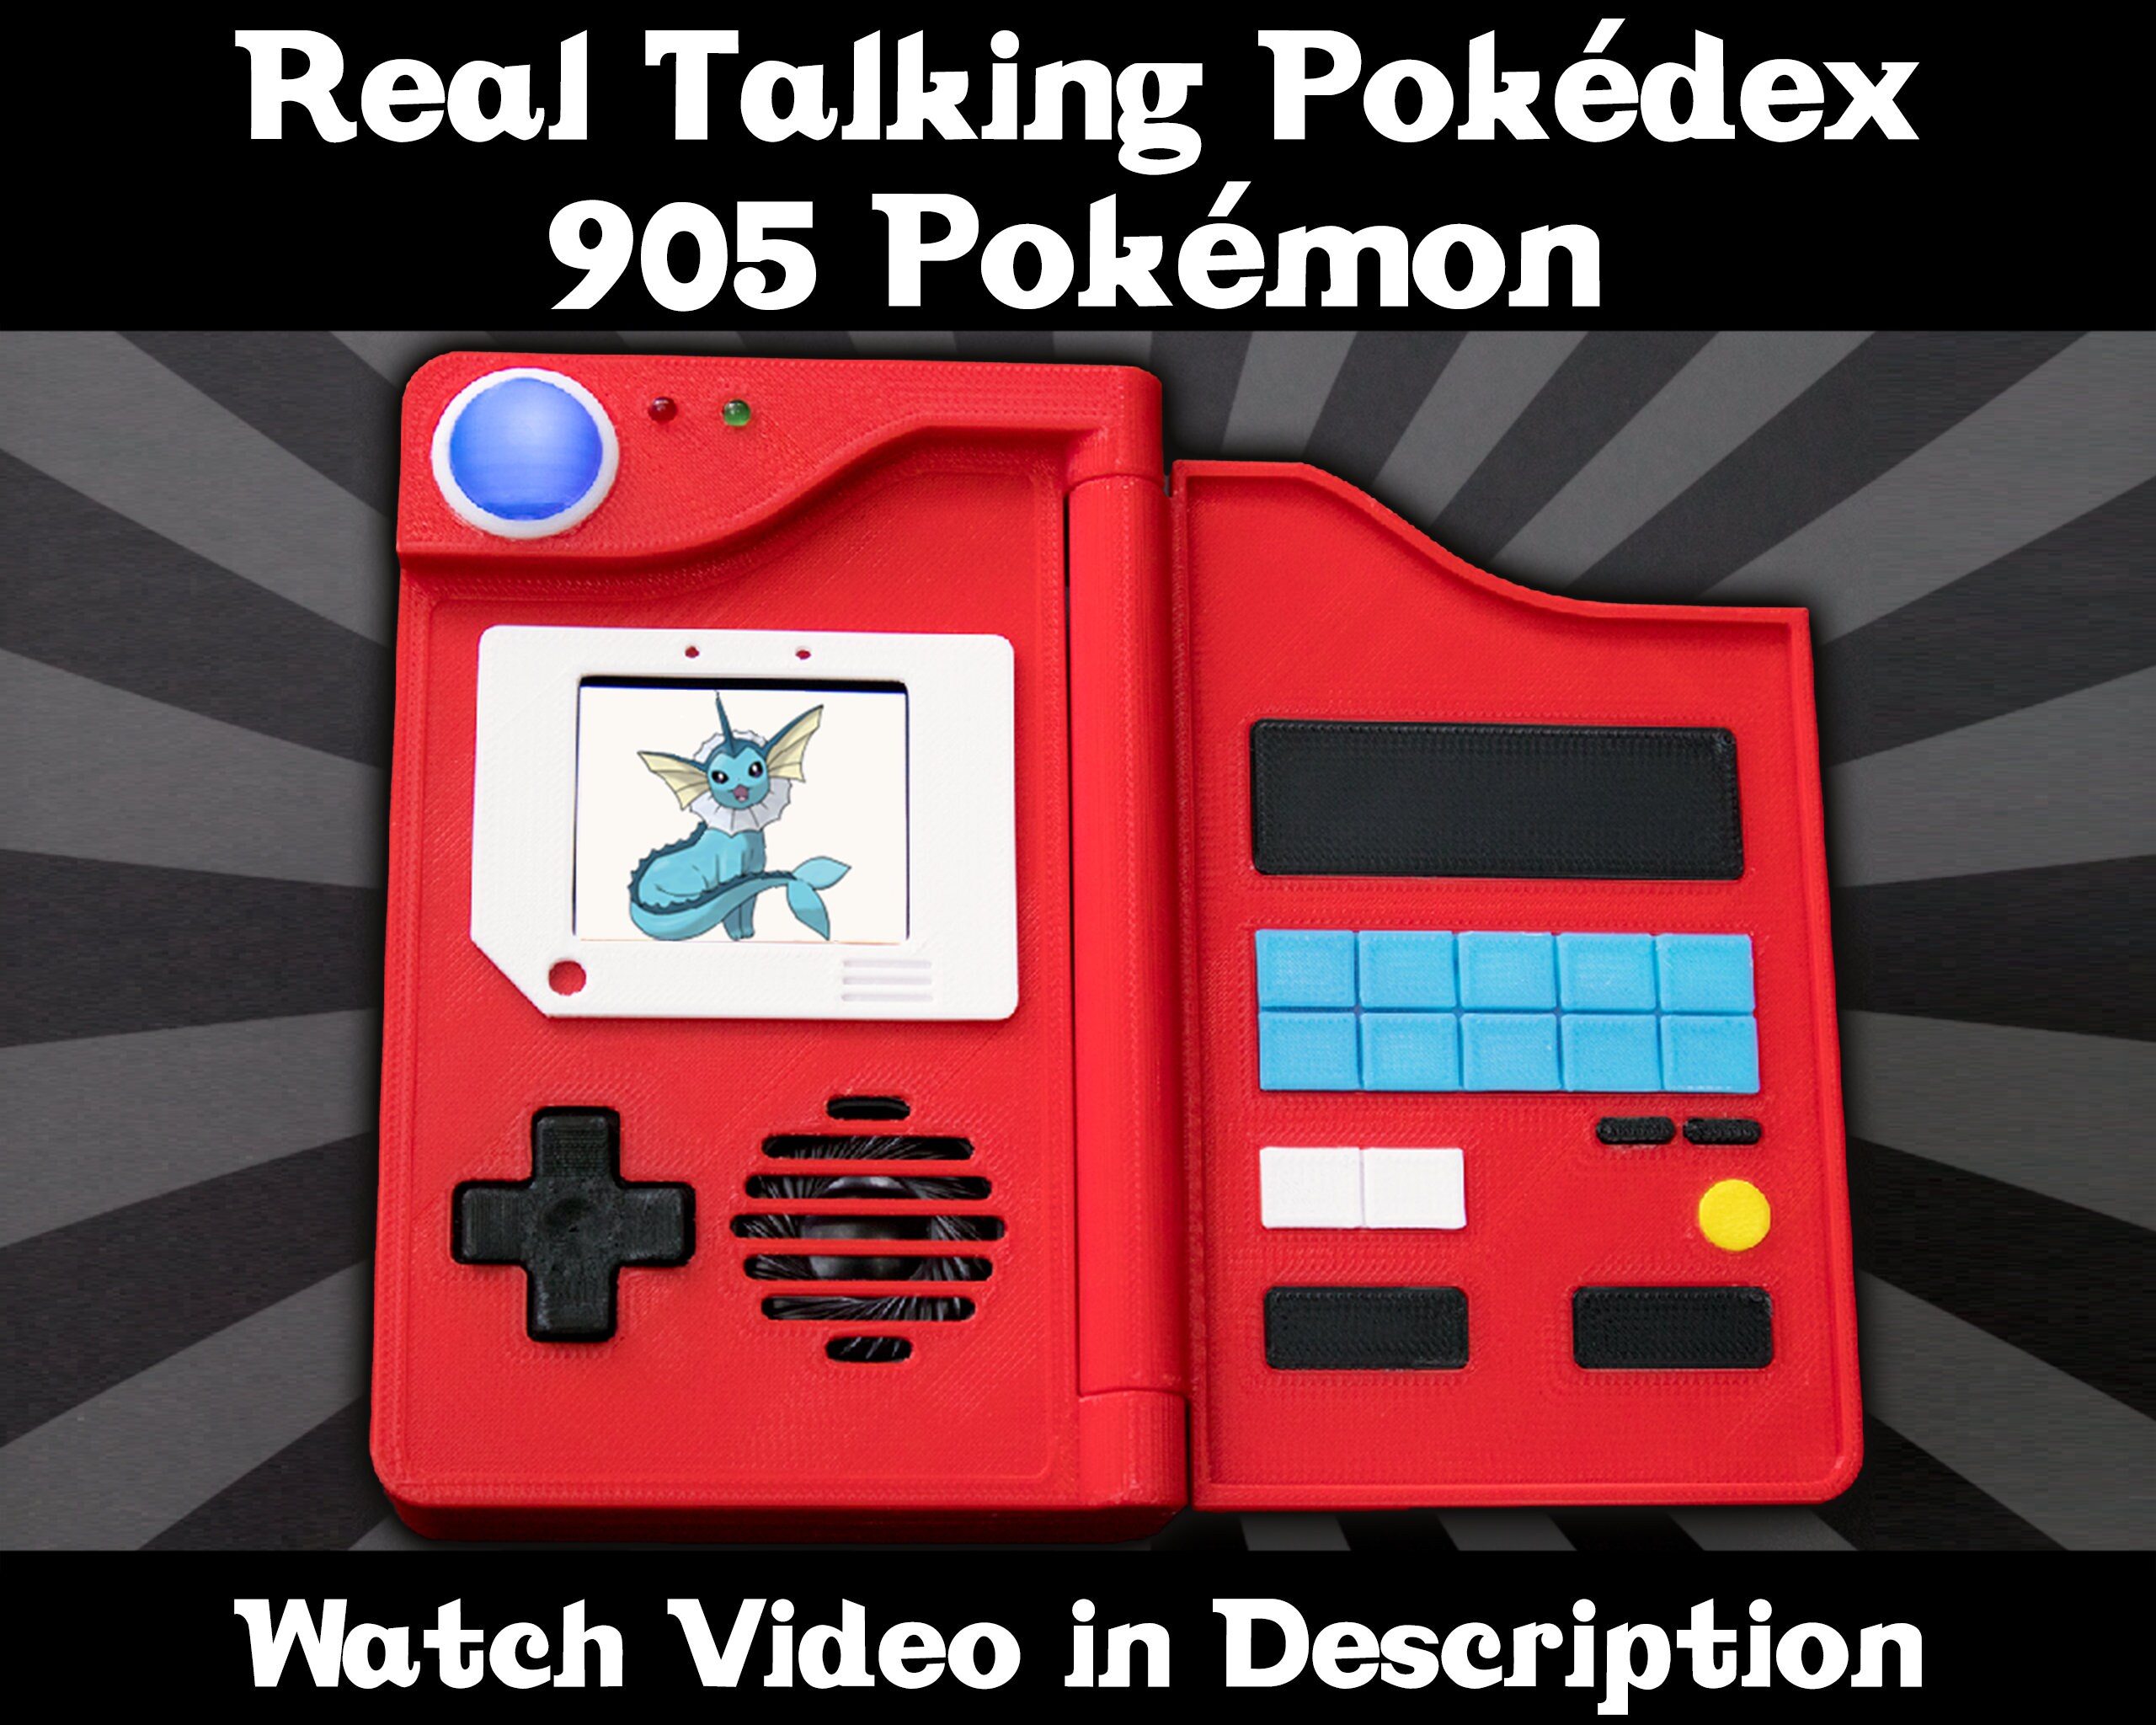 Real Electronic Talking Pokédex 905 Pokémon Fully Functional